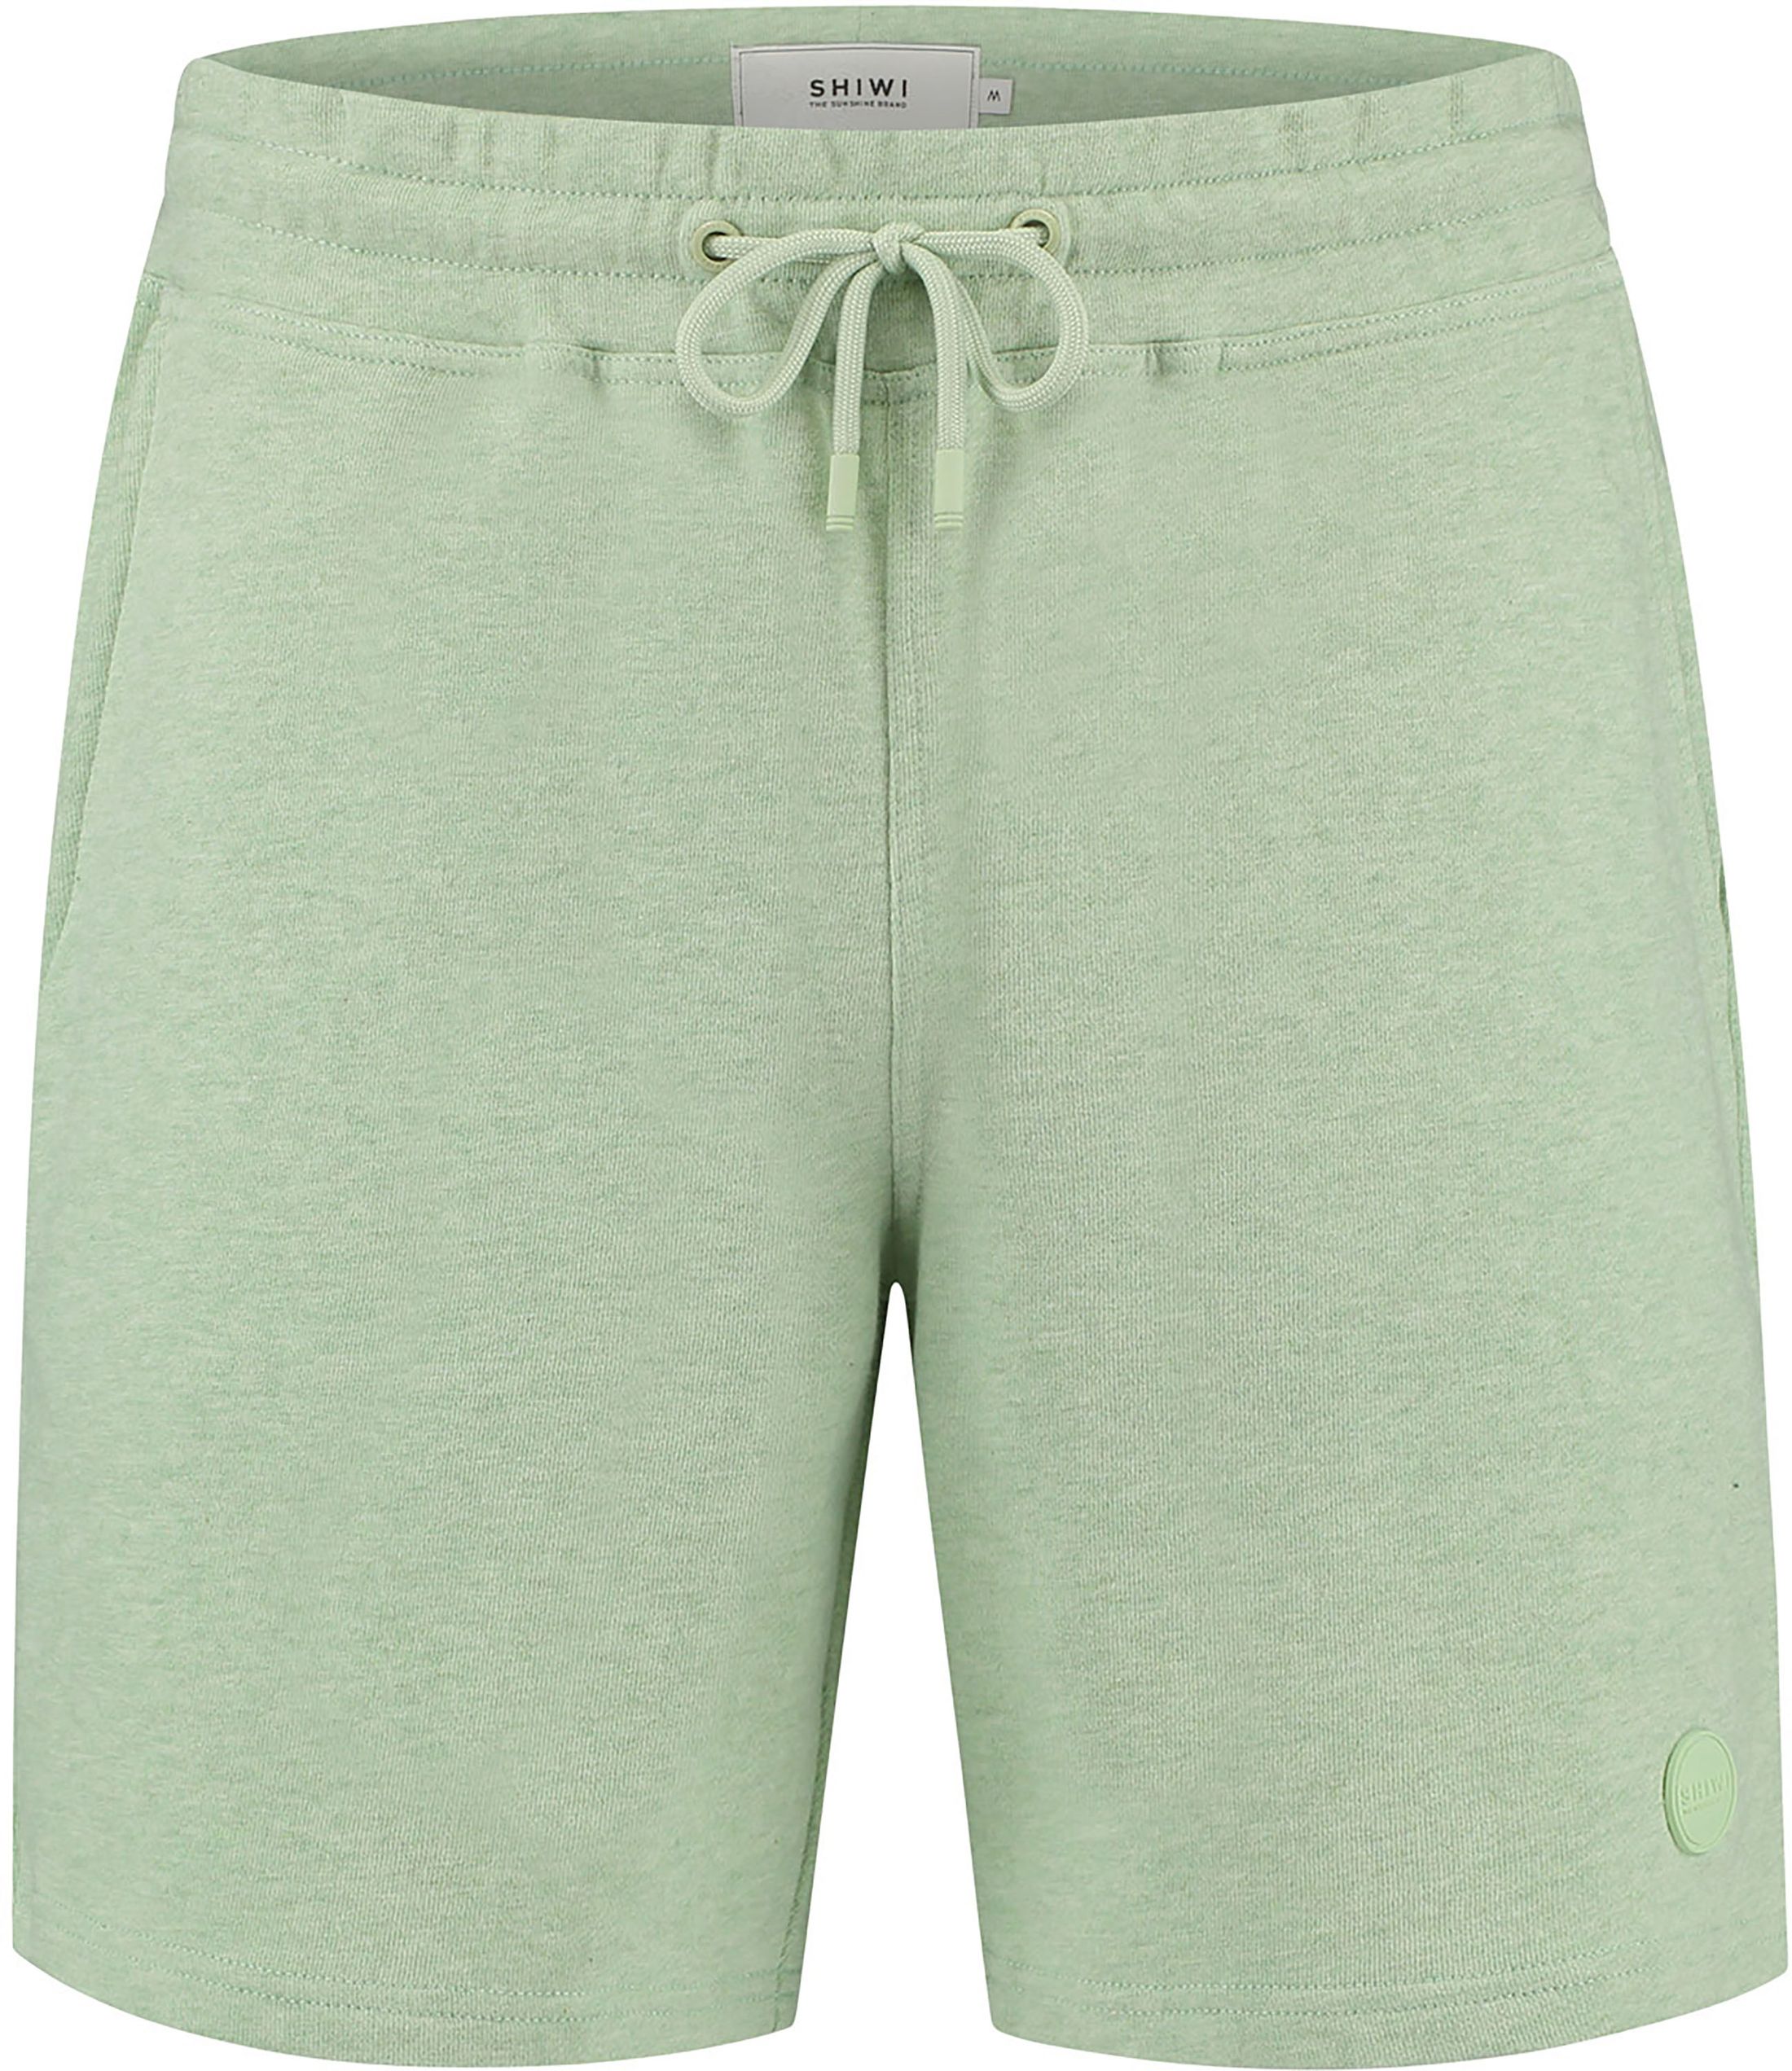 Shiwi Sweat Shorts Light Green size L